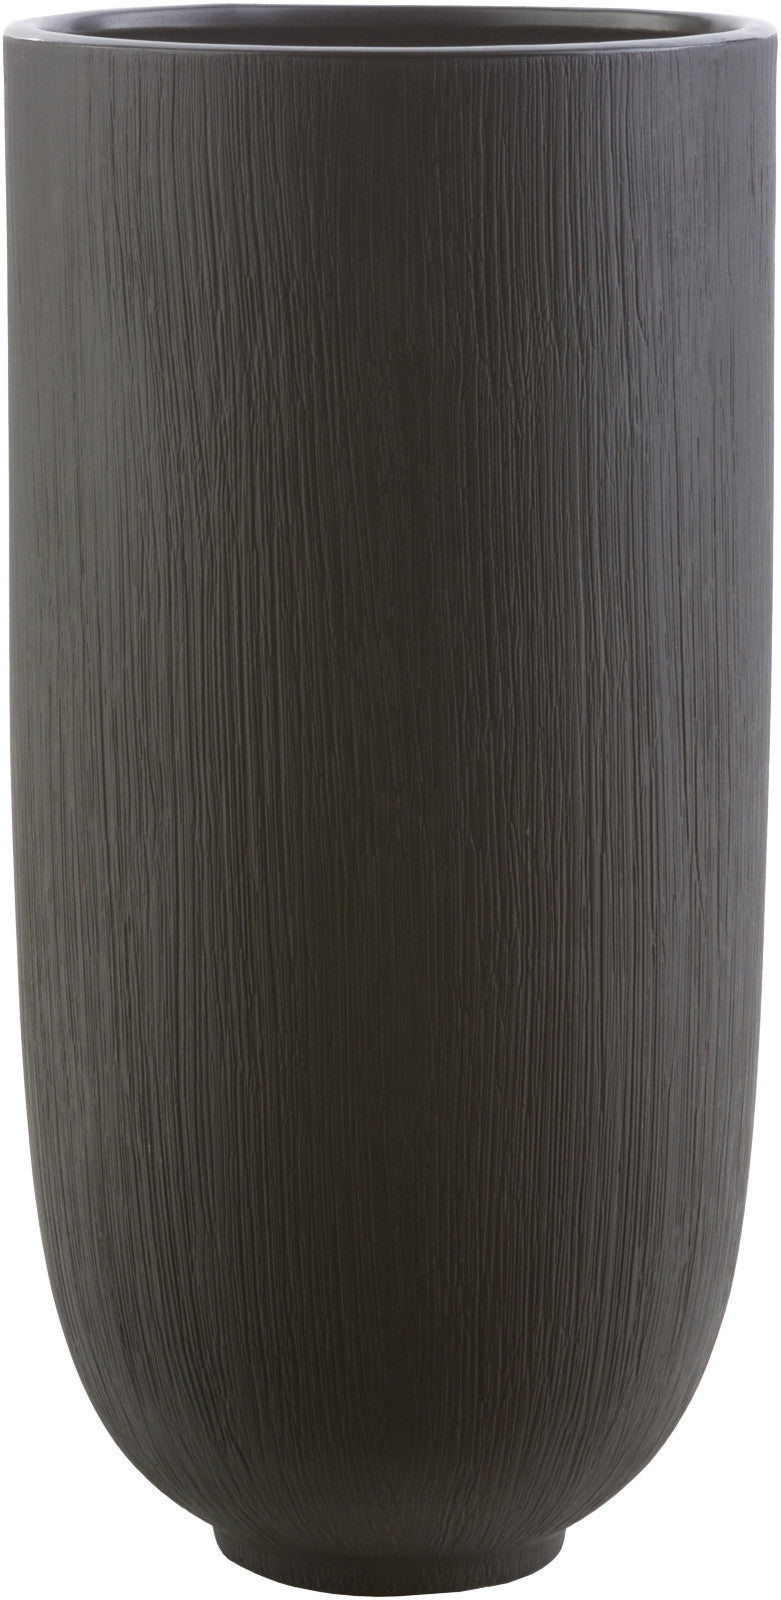 Surya Bautista BAU-706 Vase Table Vase 6.69 X 6.69 X 13.58 inches